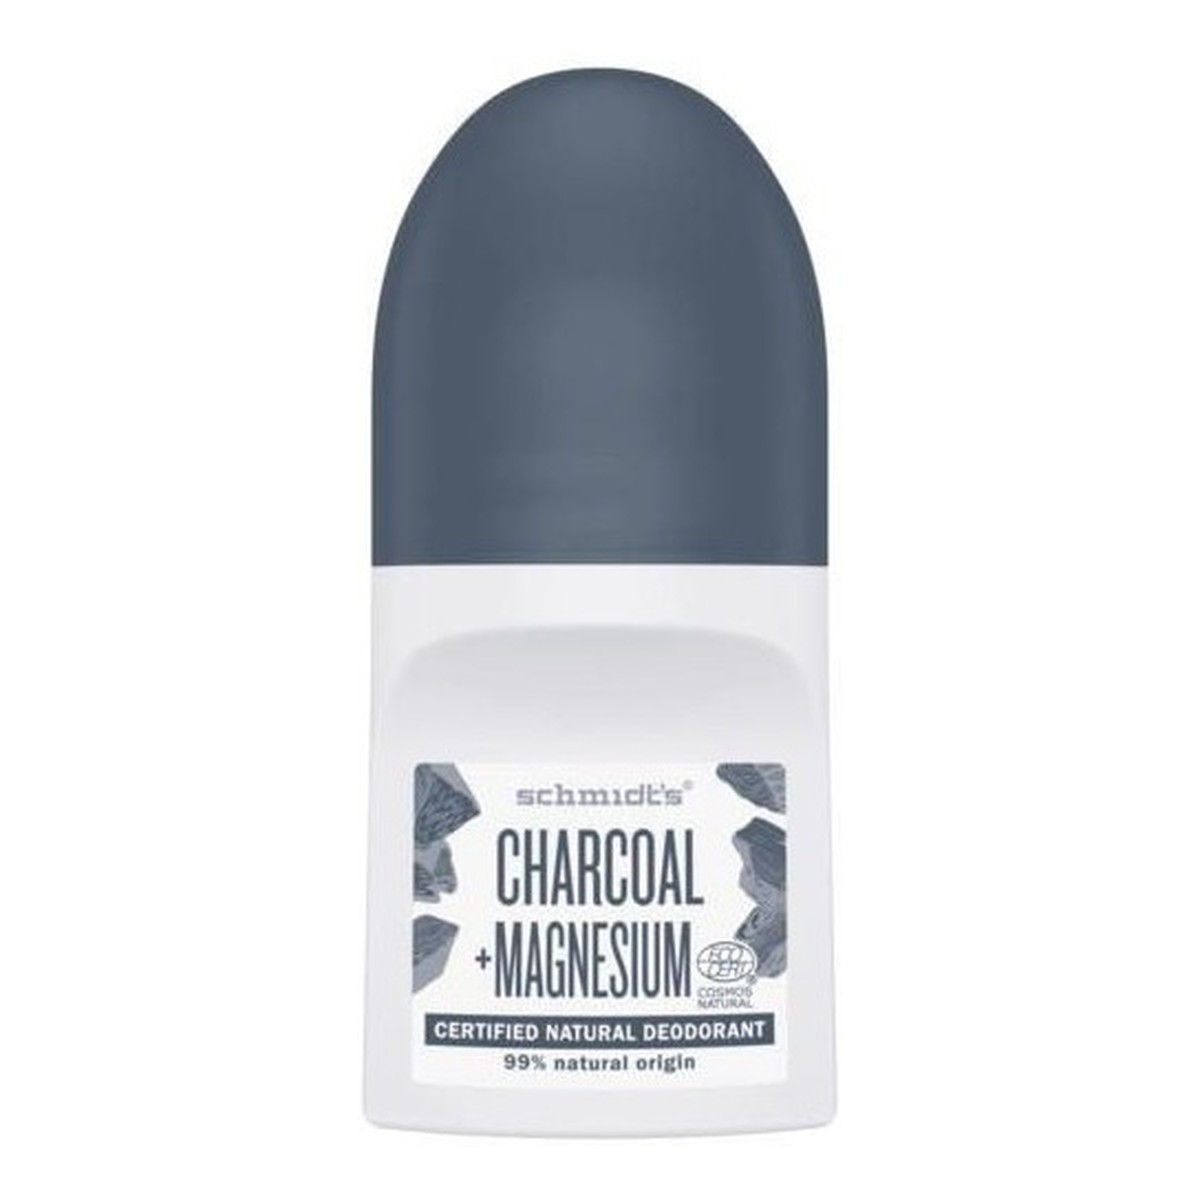 Schmidt's Natural dezodorant w kulce Węgiel & Magnez 50ml